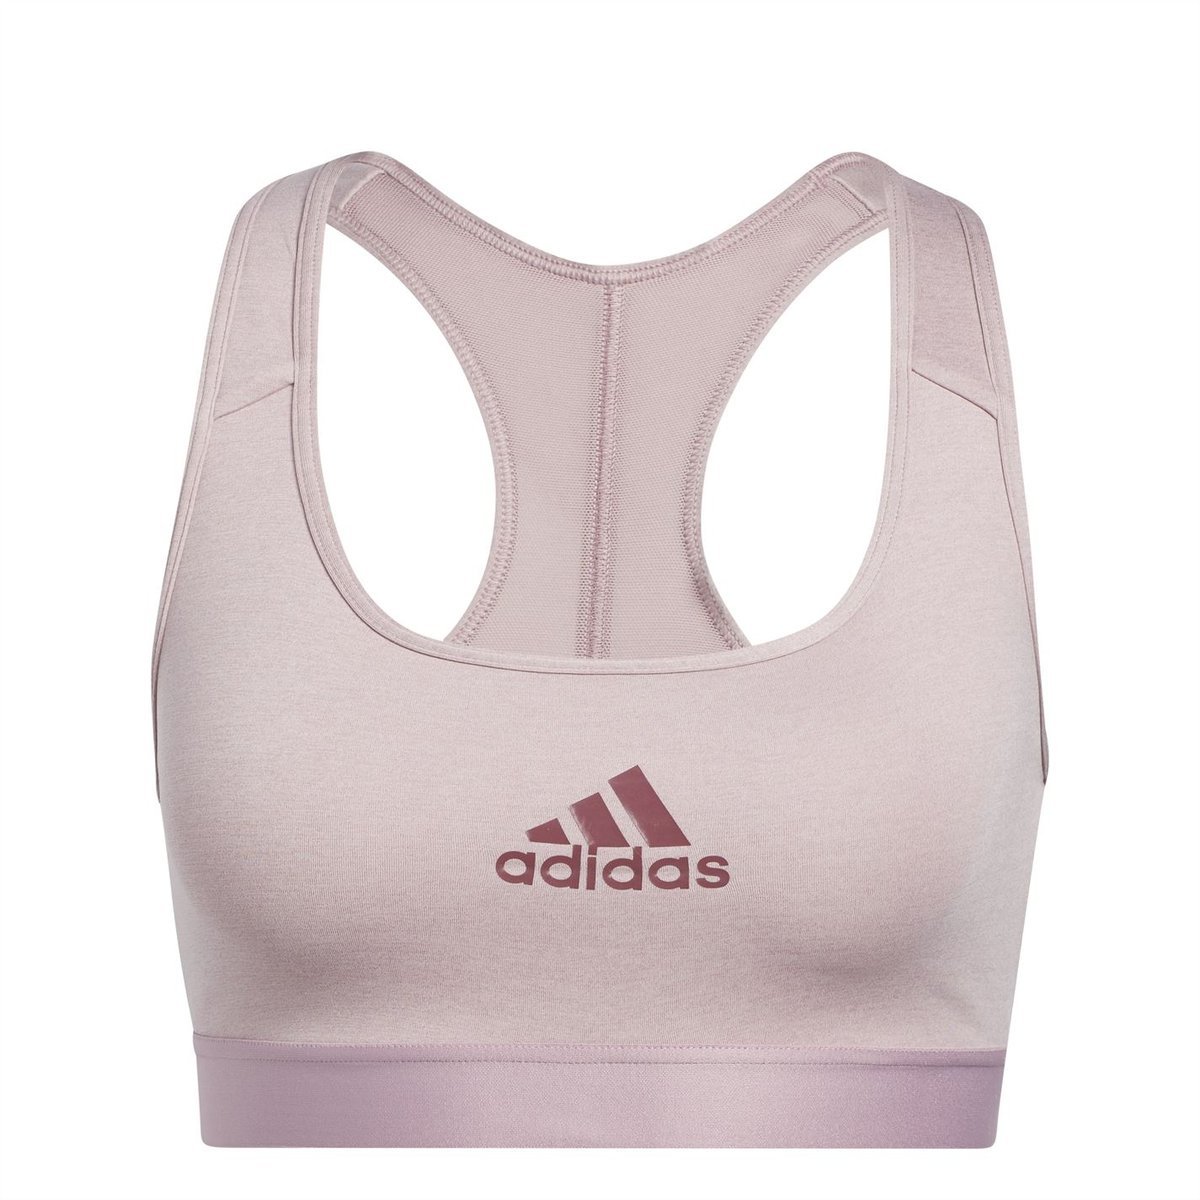 WOMENS NIKE ALPHA High Support Padded Sports Bra Plus Size 2X (20-22) A-B  Cups £49.99 - PicClick UK